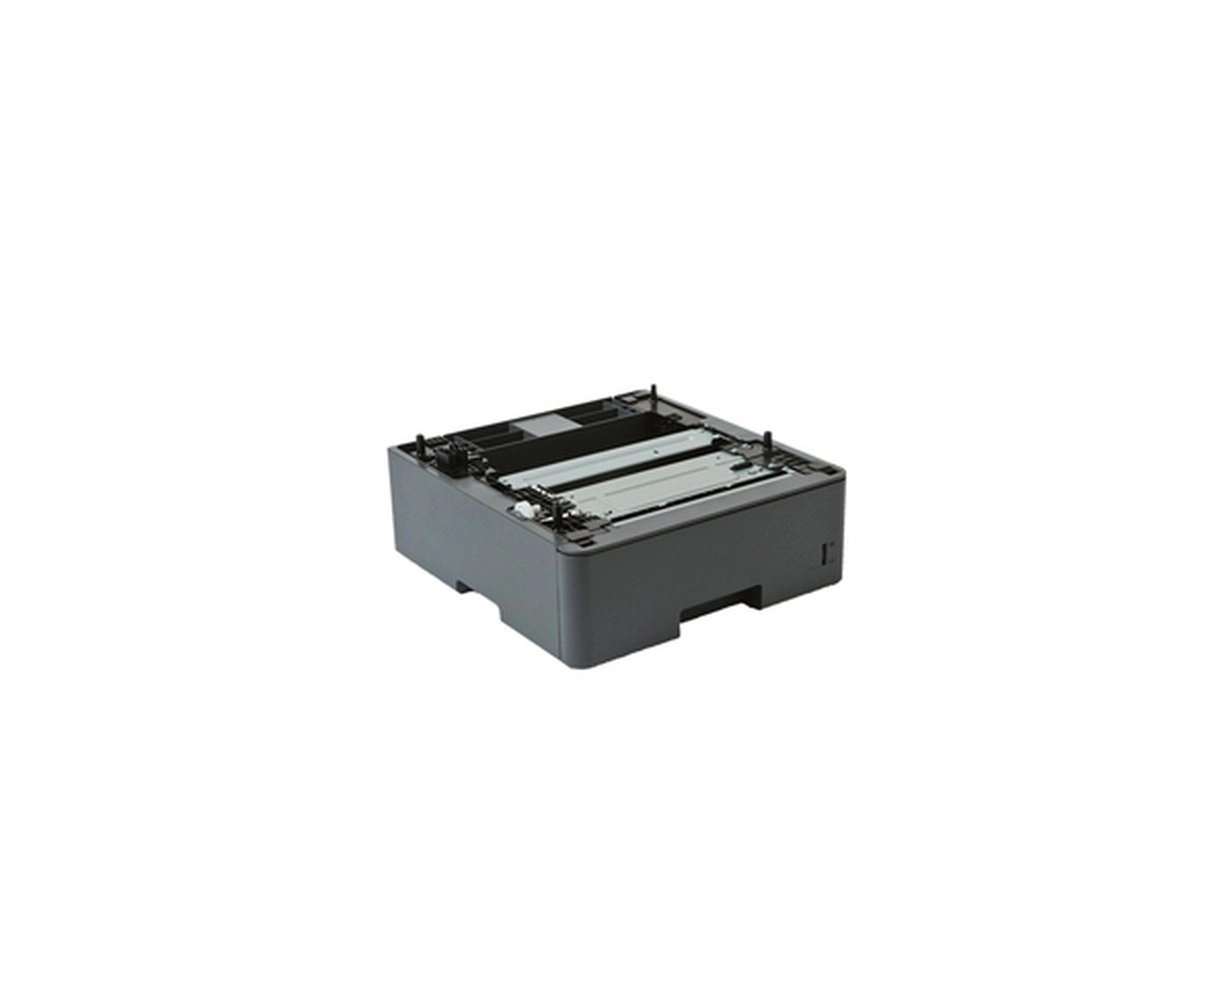 Papierkassette LT-6500, Papierzufuhr